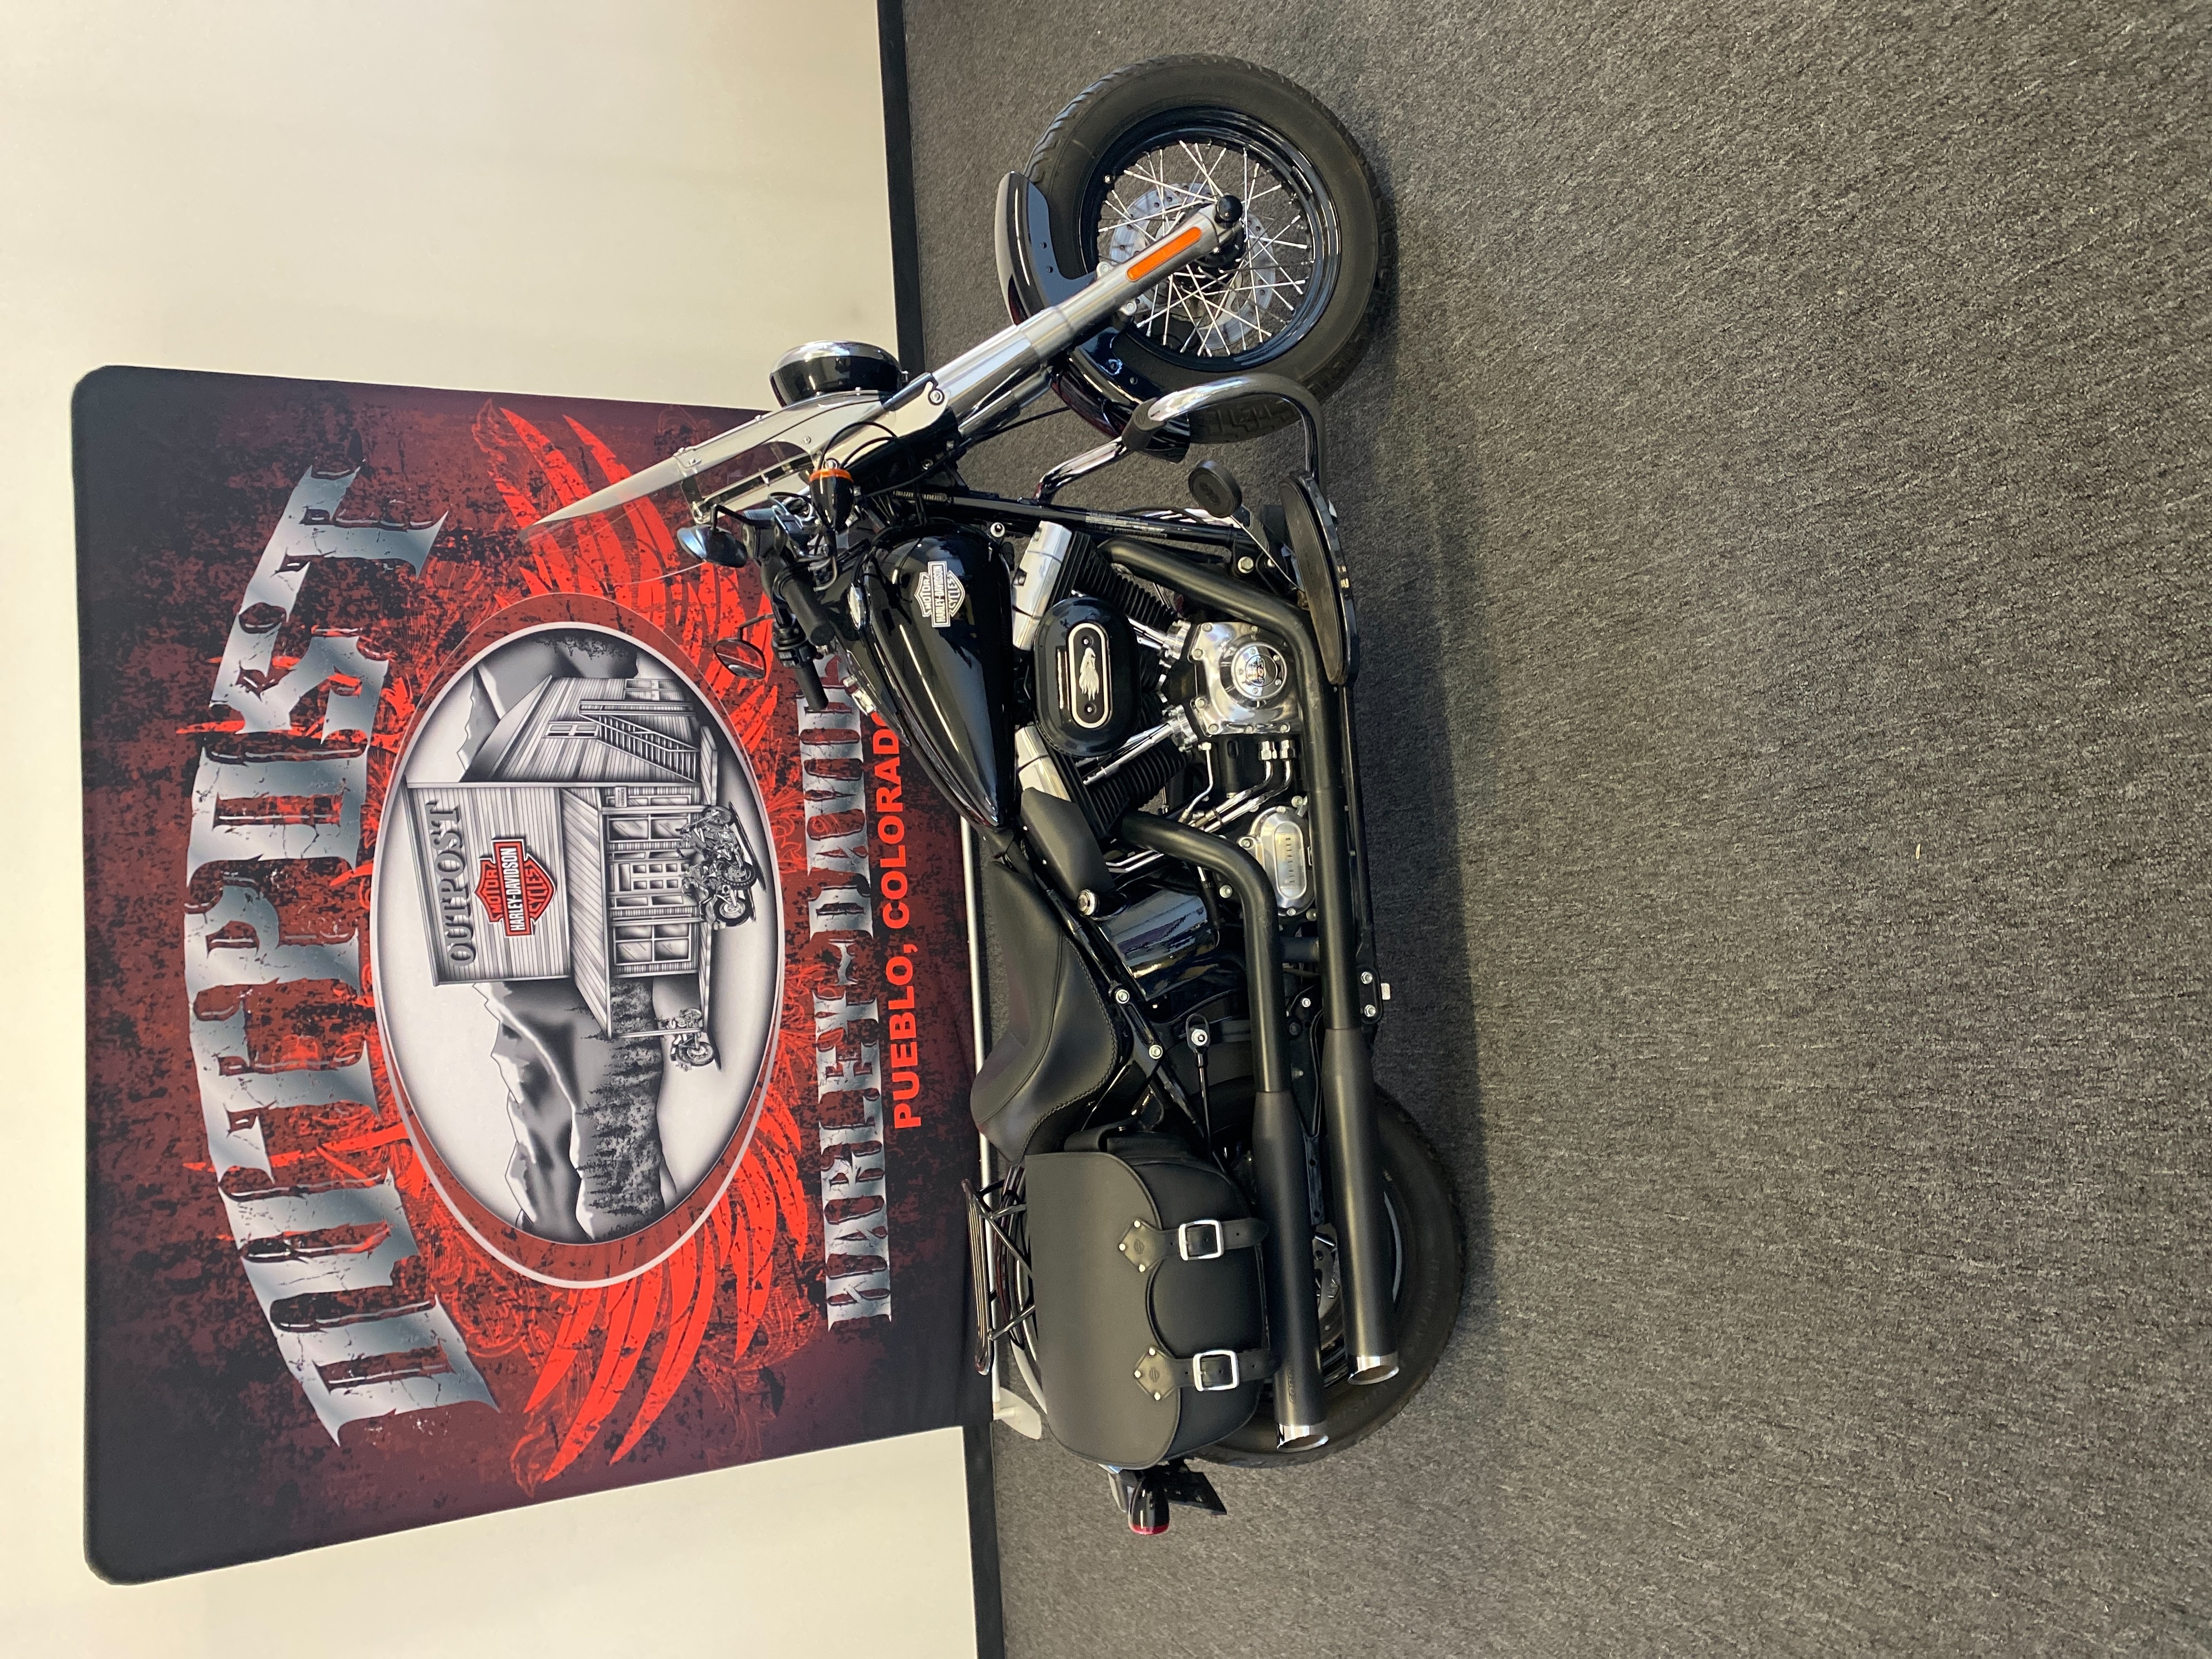 2013 Harley-Davidson Softail Slim at Outpost Harley-Davidson